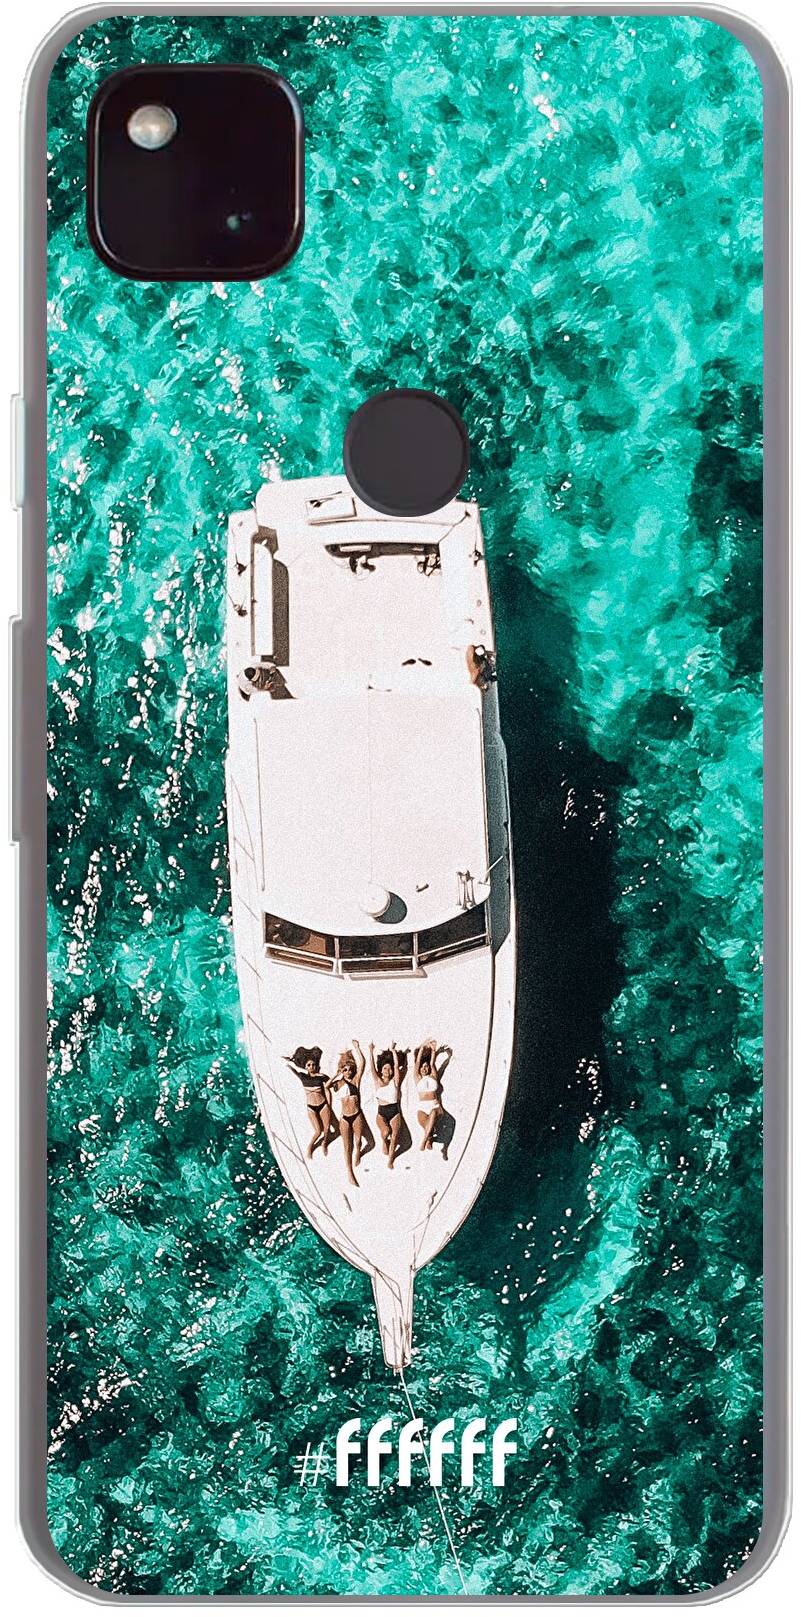 Yacht Life Pixel 4a 5G